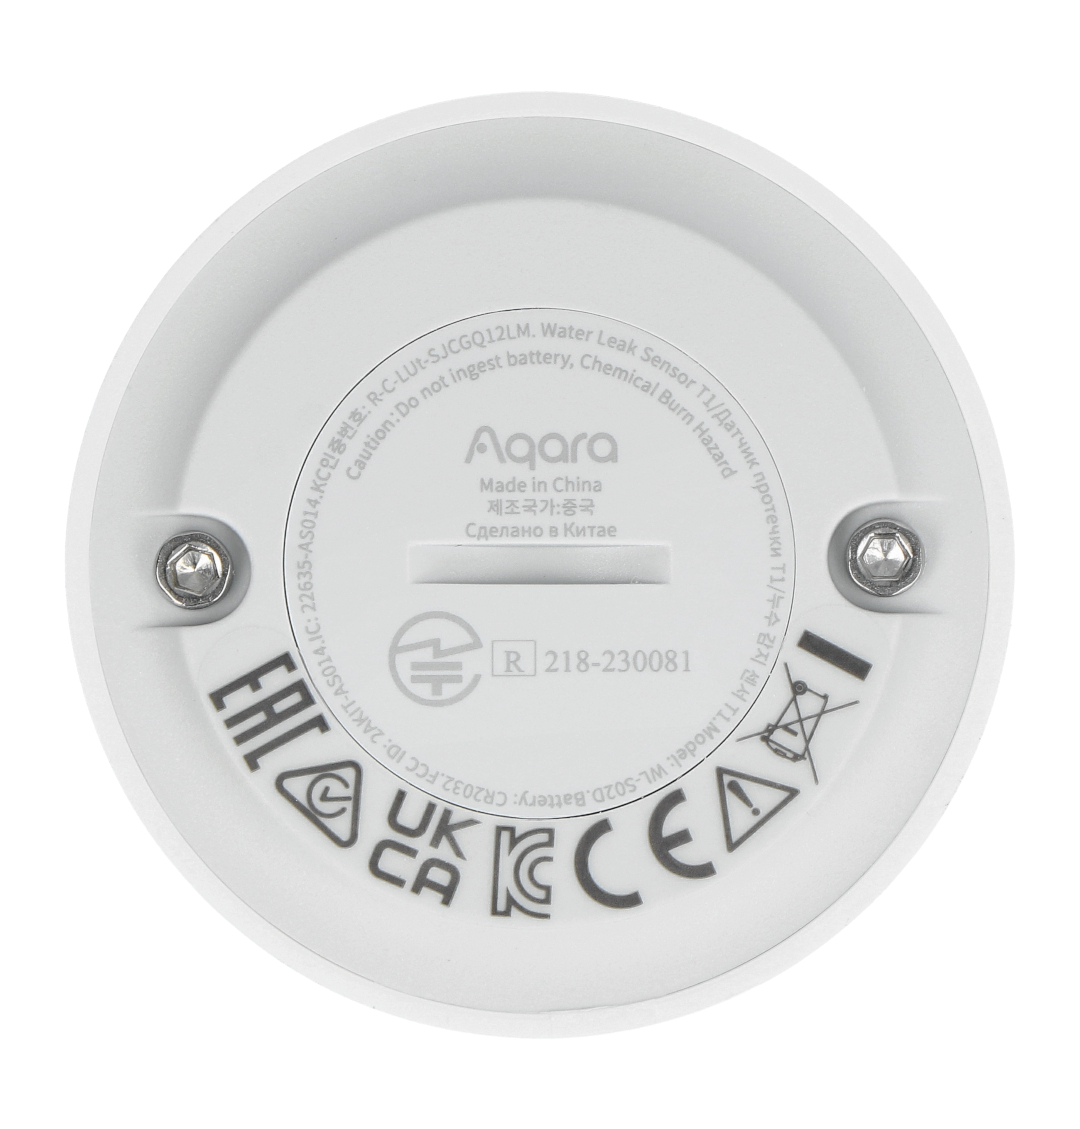 Aqara Water Leak Sensor ZigBee - white - IP67 - SJCGQ11LM Botland